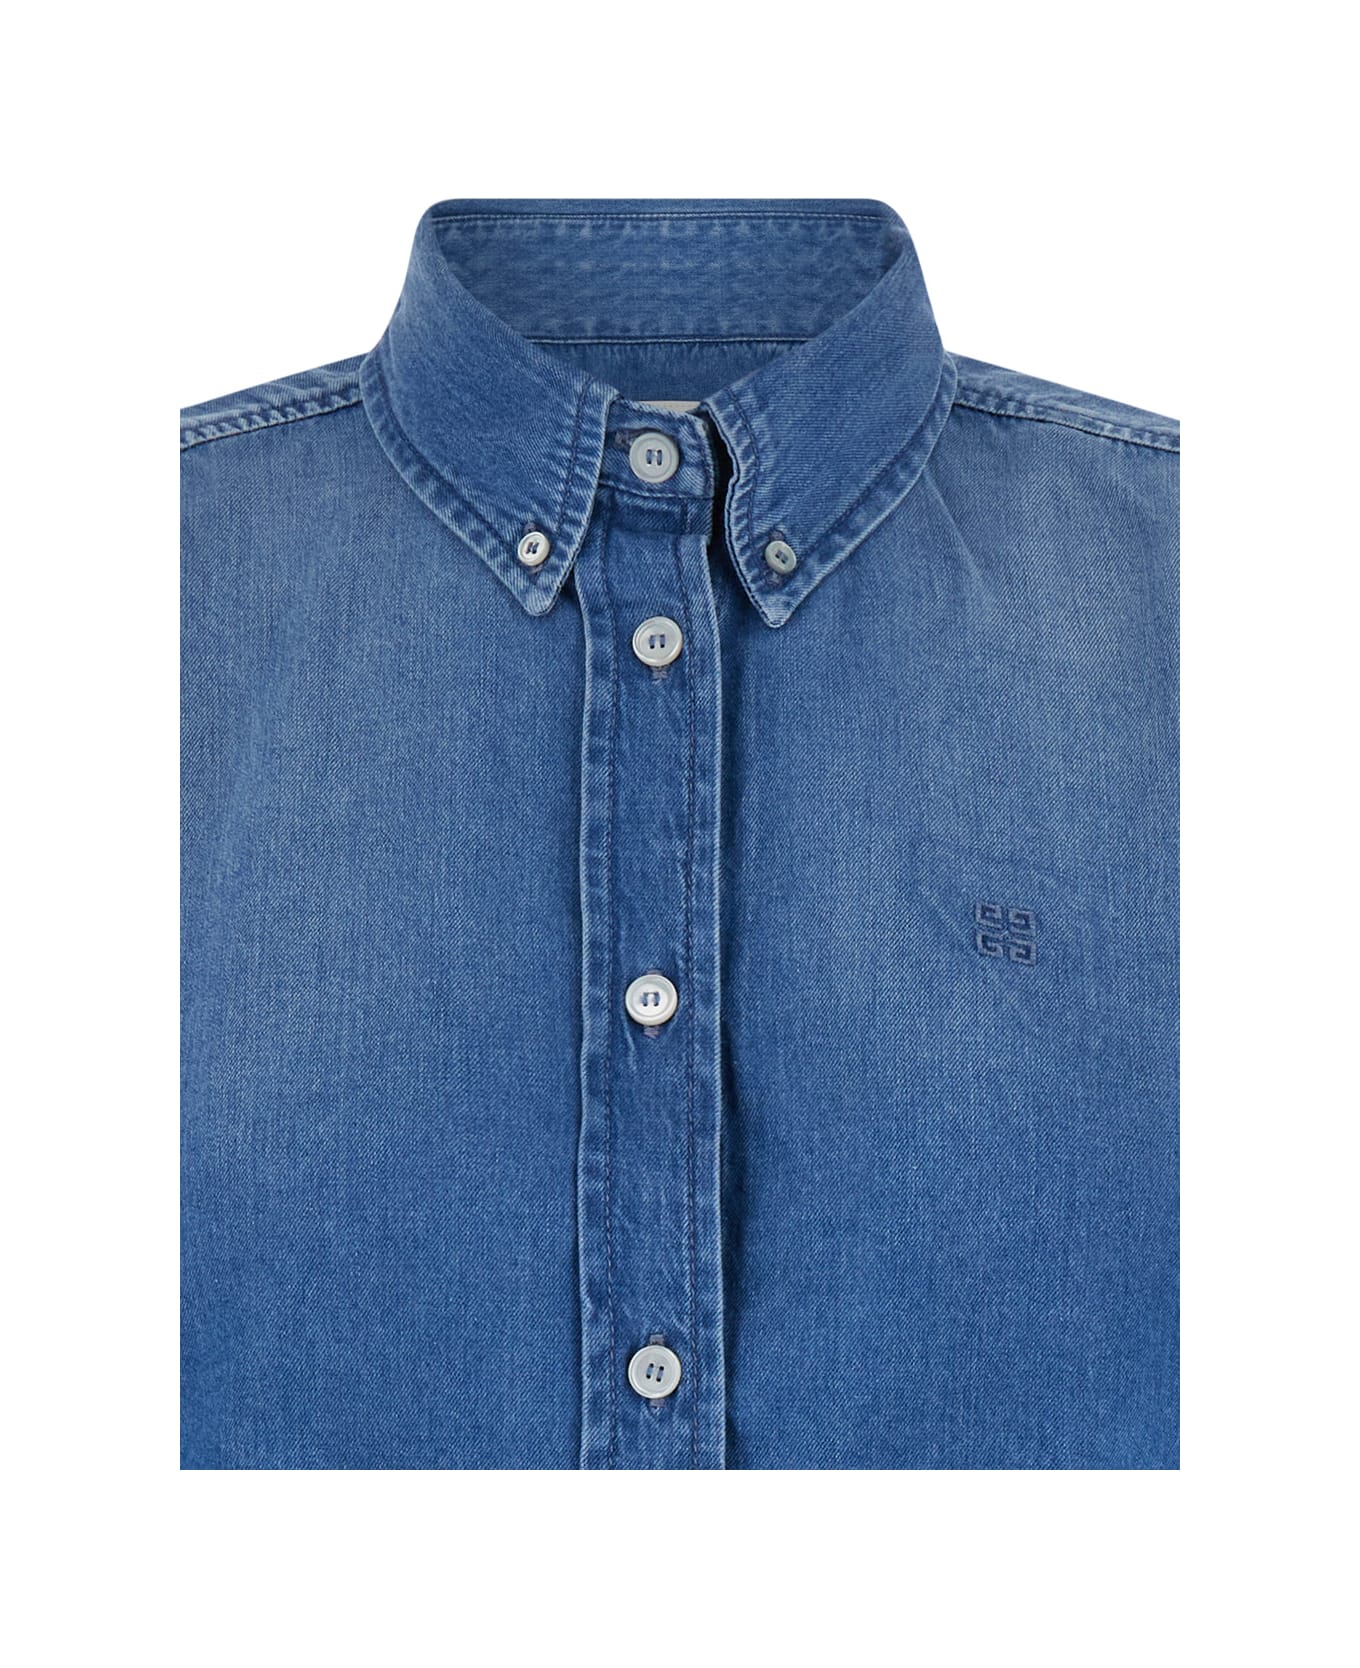 Givenchy Blue Jeans Crop Shirt In Denim Woman - Blu